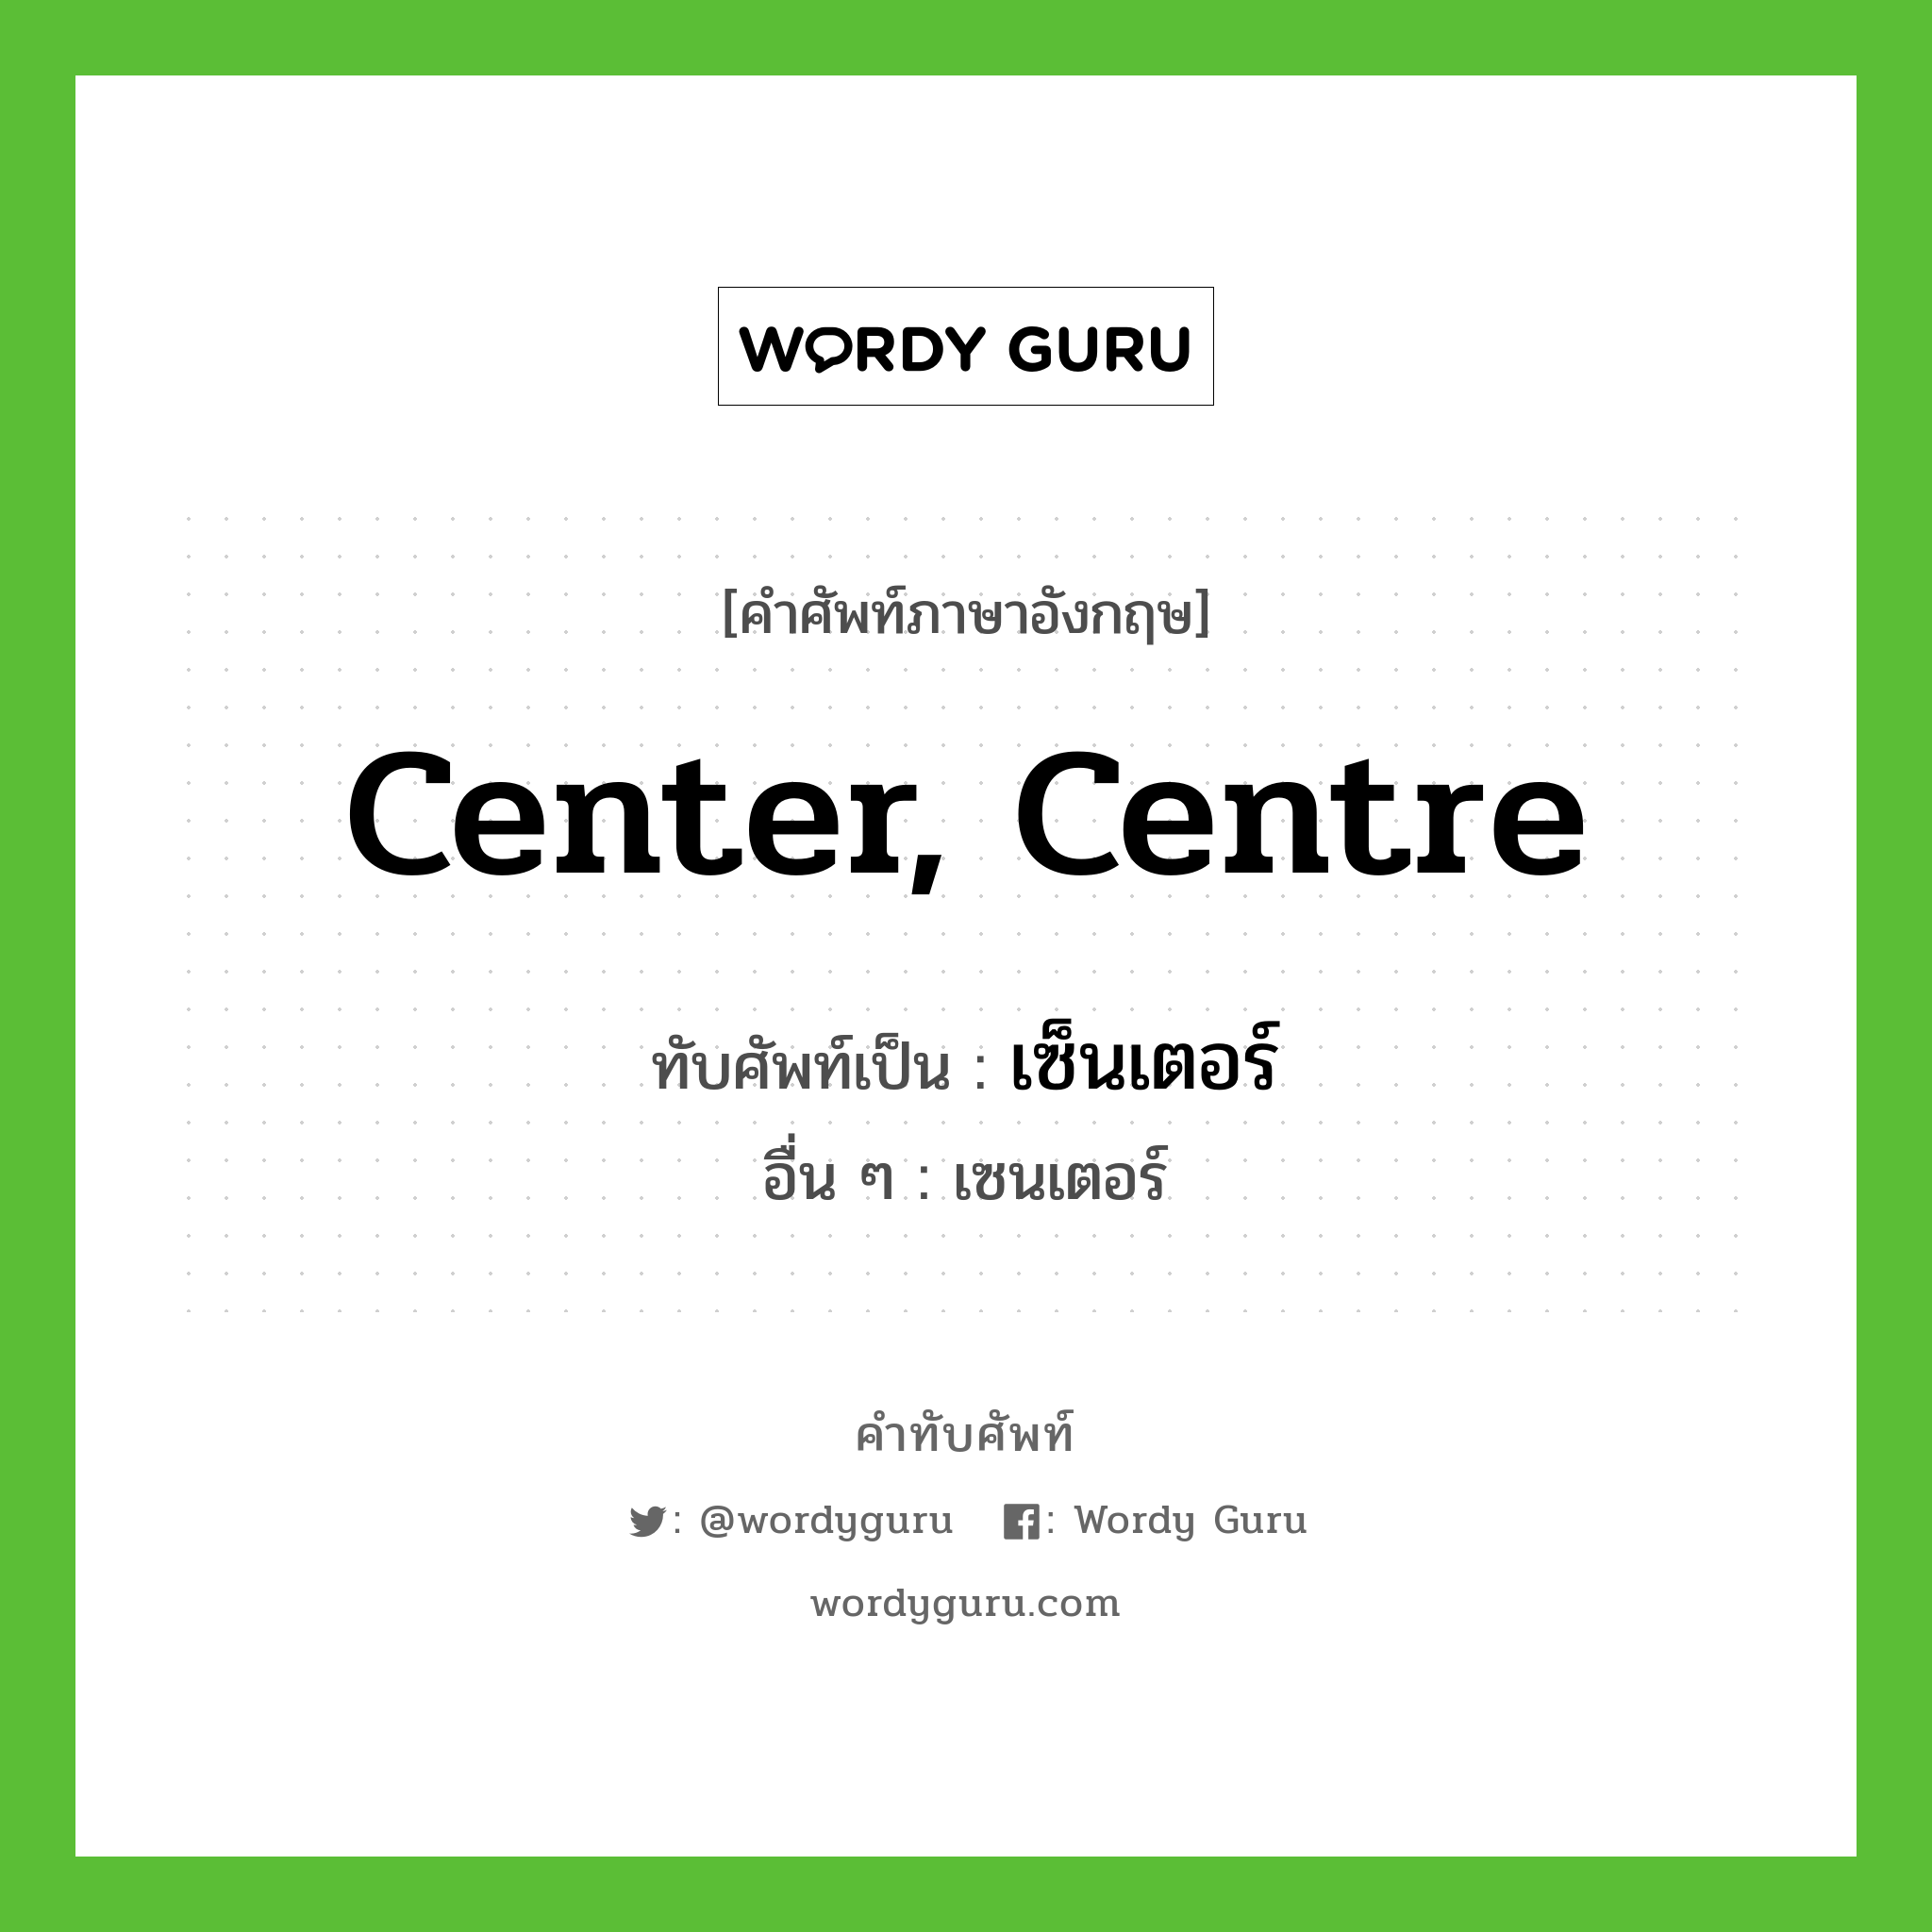 center, centre เขียนเป็นคำไทยว่าอะไร?, คำศัพท์ภาษาอังกฤษ center, centre ทับศัพท์เป็น เซ็นเตอร์ อื่น ๆ เซนเตอร์